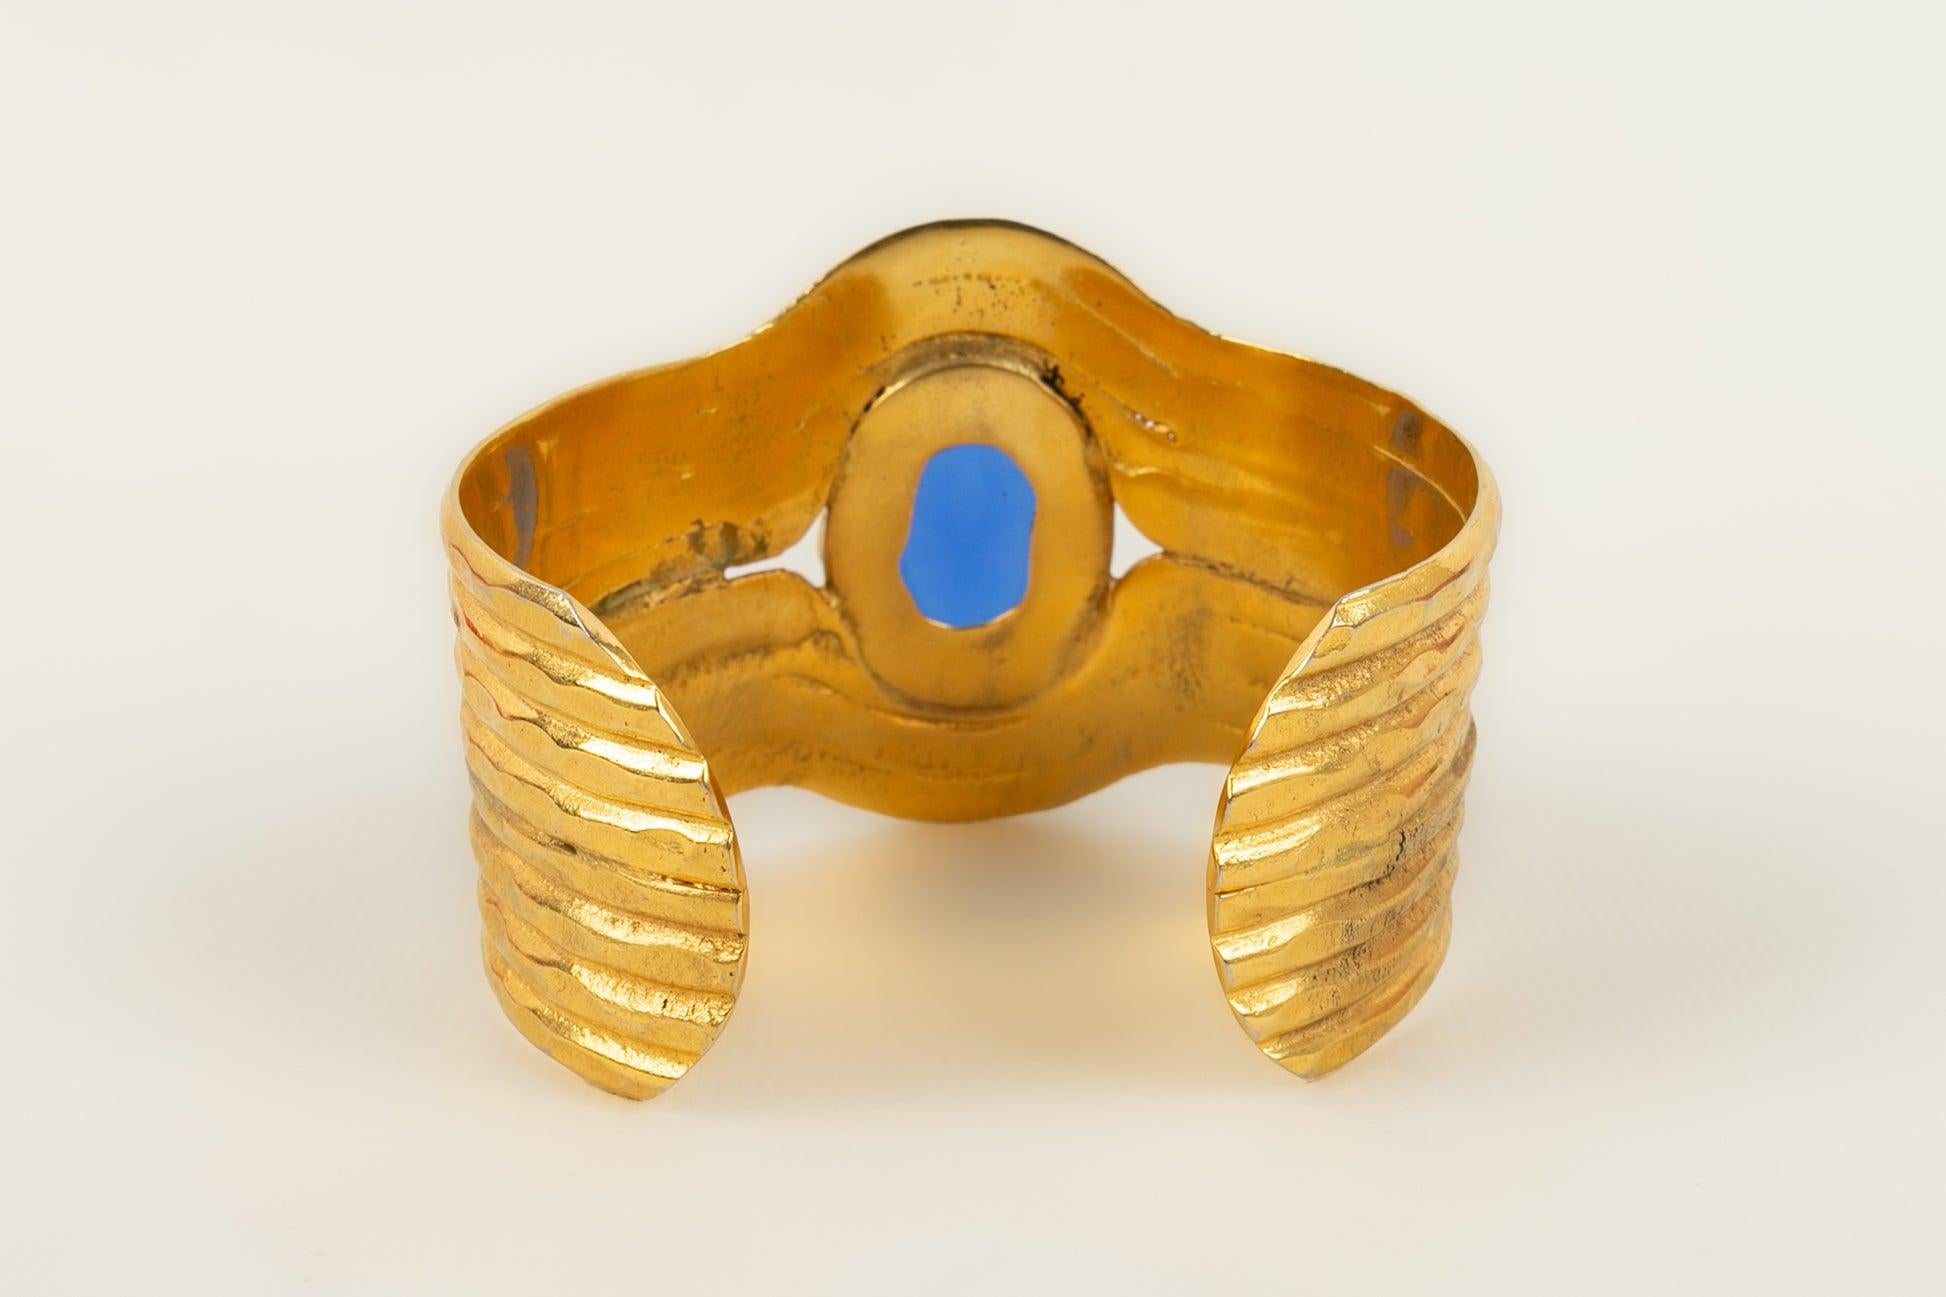 Gianfranco Ferré Cuff Bracelet in Golden Metal In Excellent Condition For Sale In SAINT-OUEN-SUR-SEINE, FR